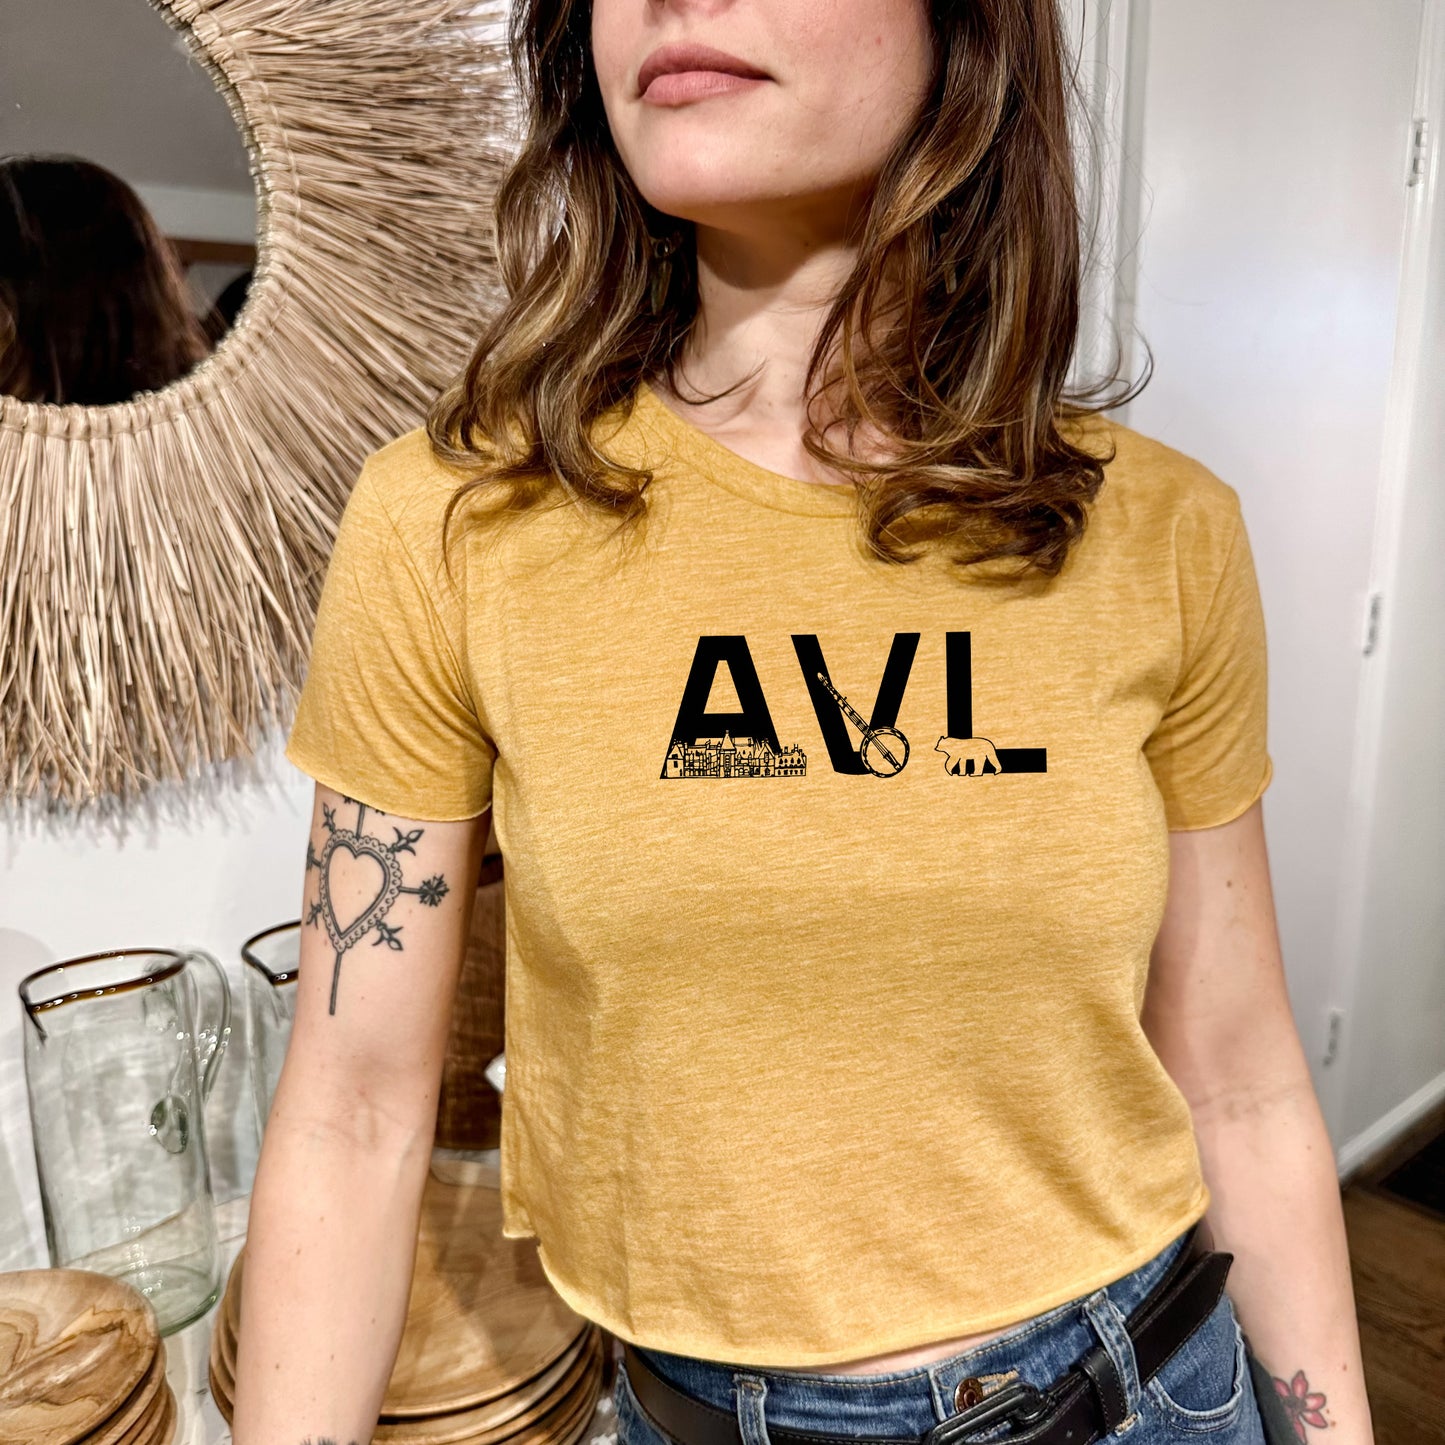 AVL (Asheville) - Women's Crop Tee - Heather Gray or Gold